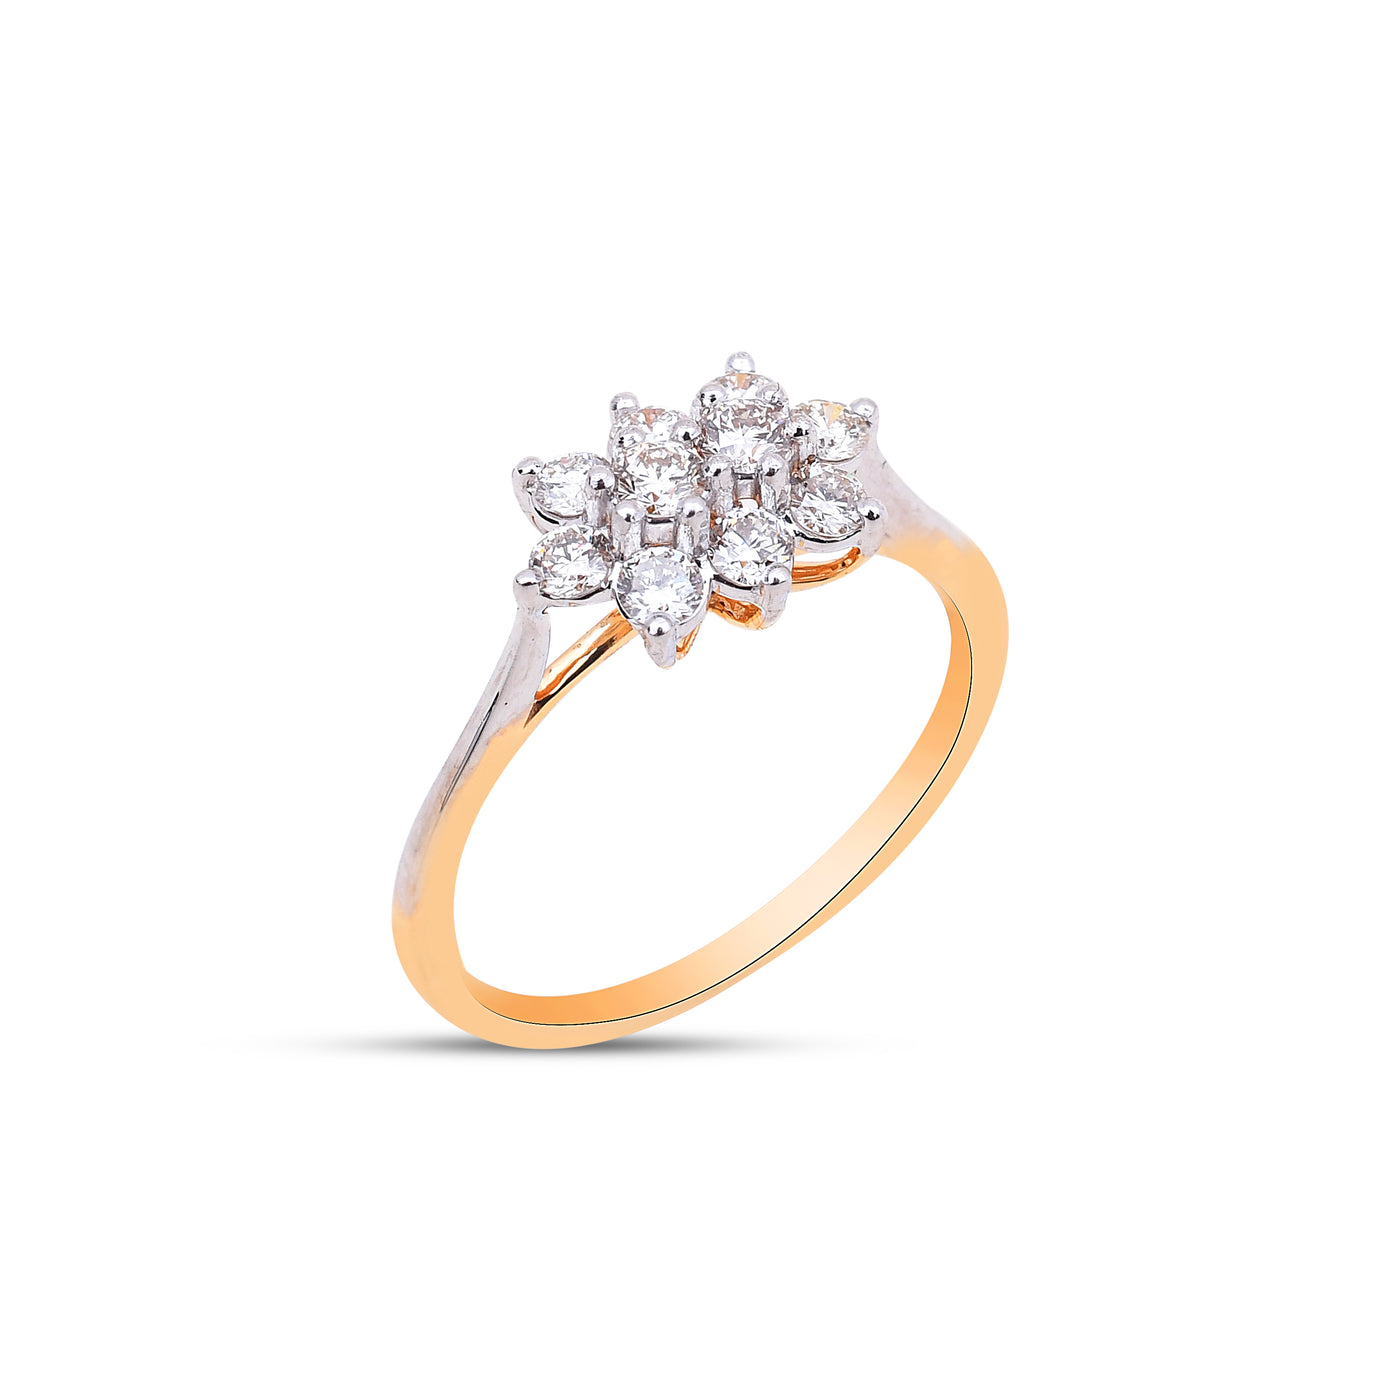 The Jessie Diamond Ring